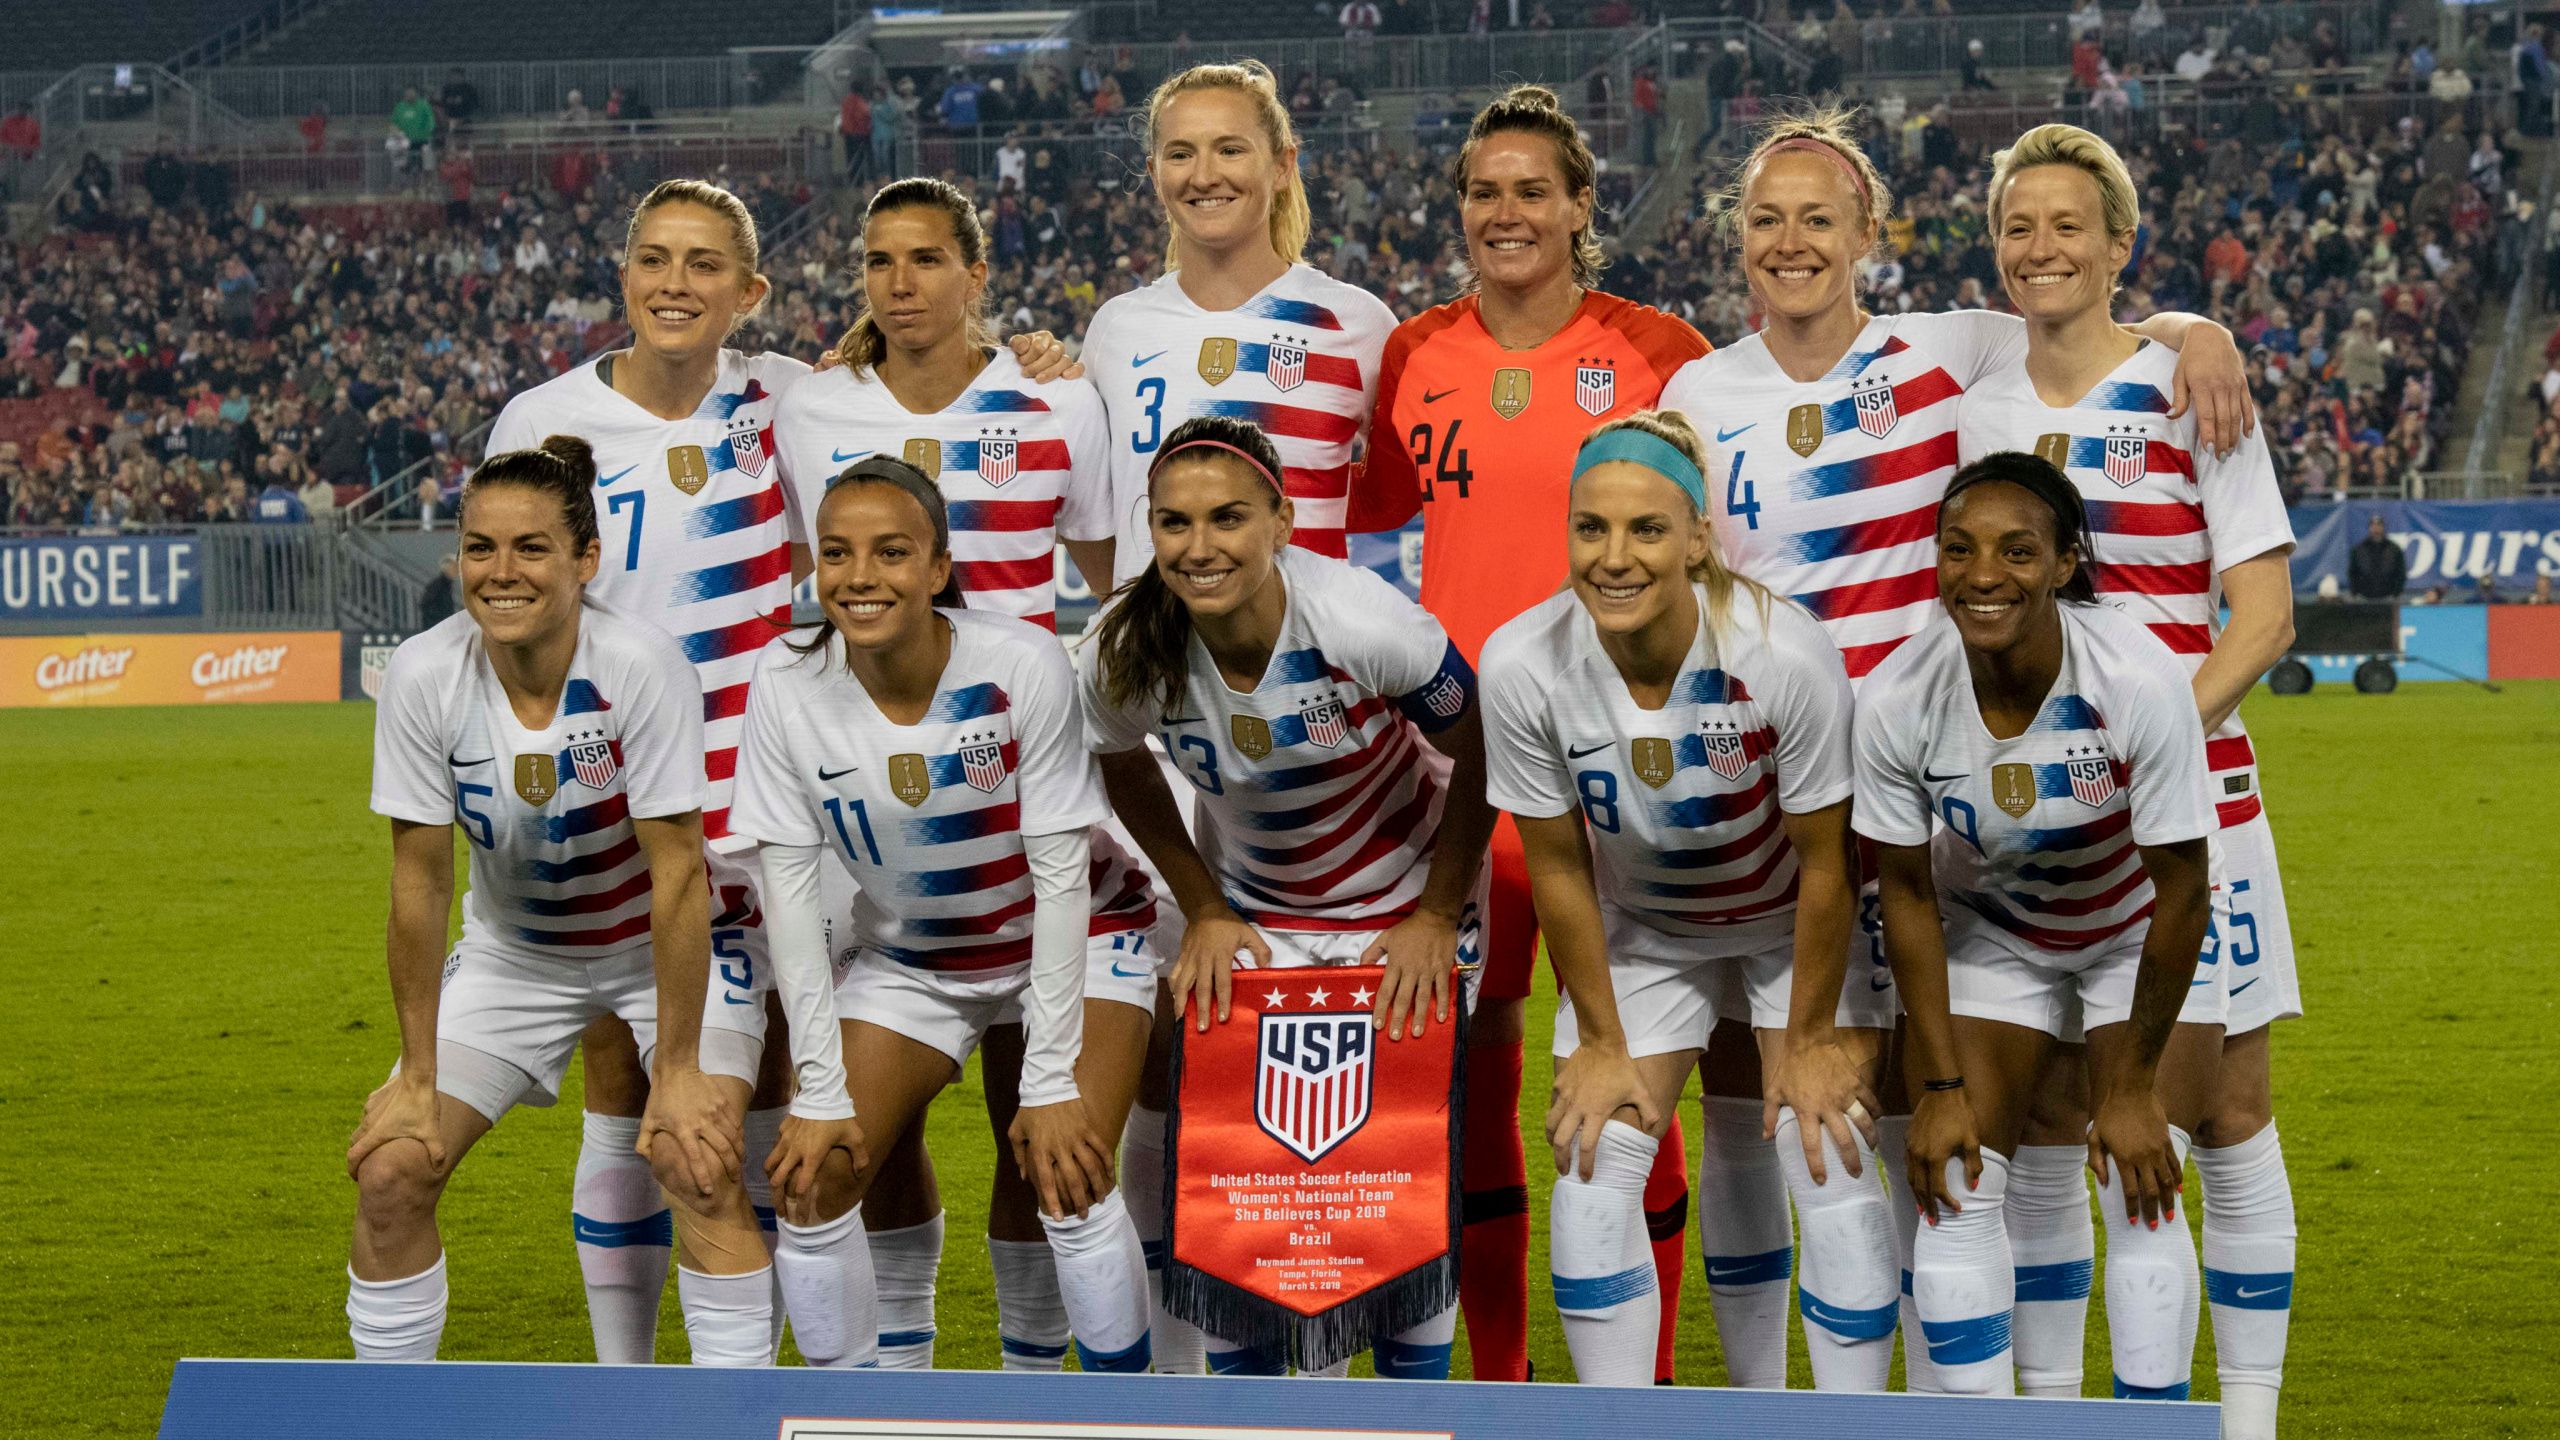 U.S. Women's Soccer Team Sues U.S. Soccer, Alleging Gender